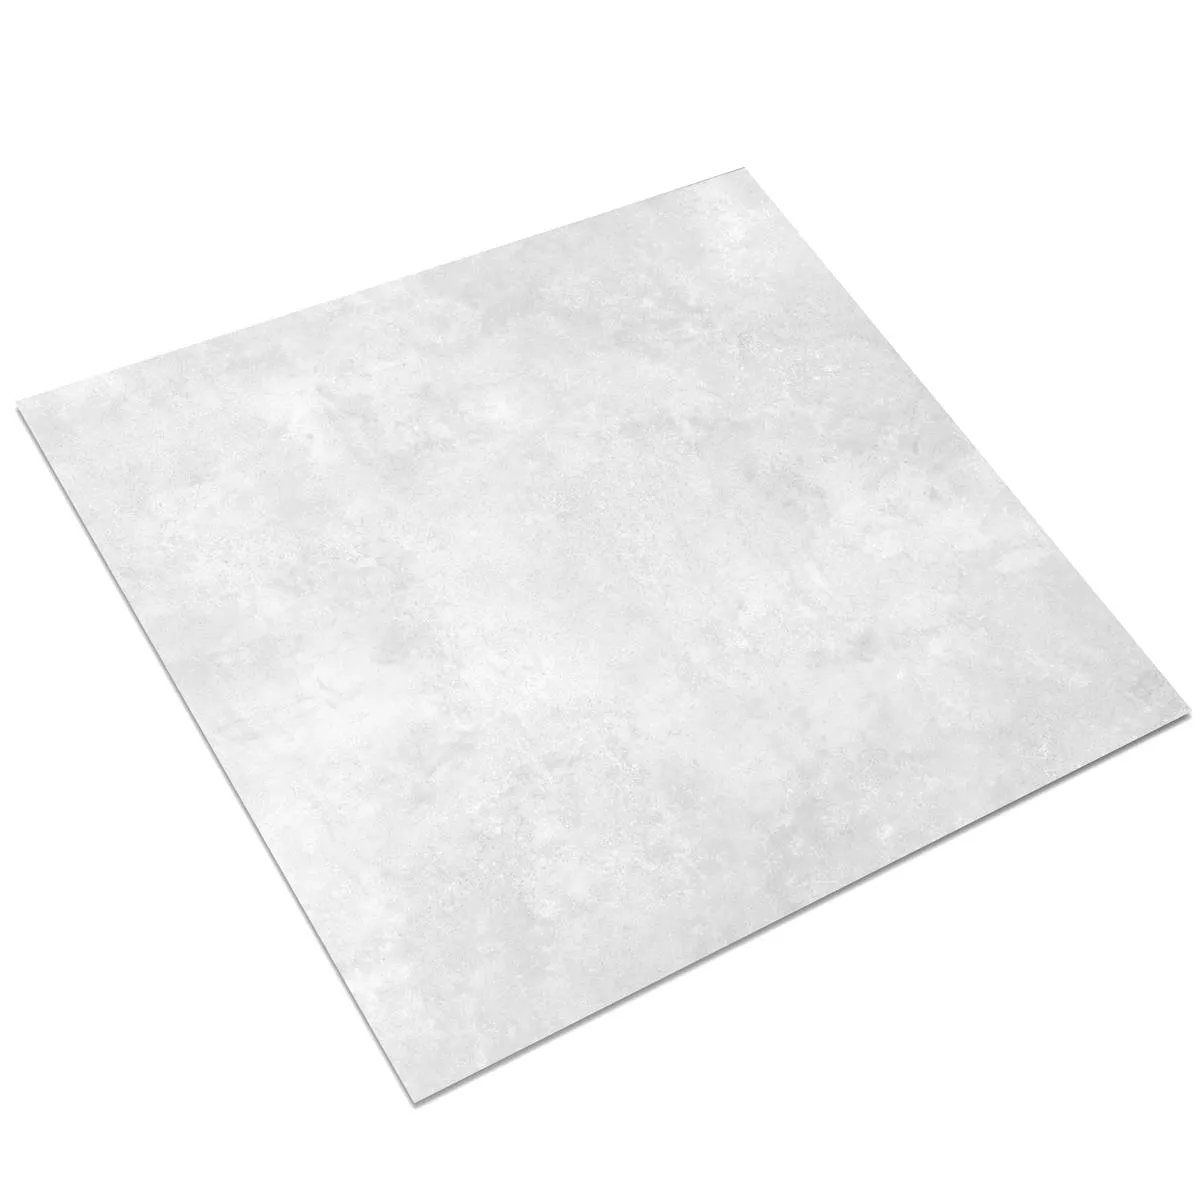 Mодел Подова Плочка Illusion Метален Вид Lappato Бяло 120x120cm